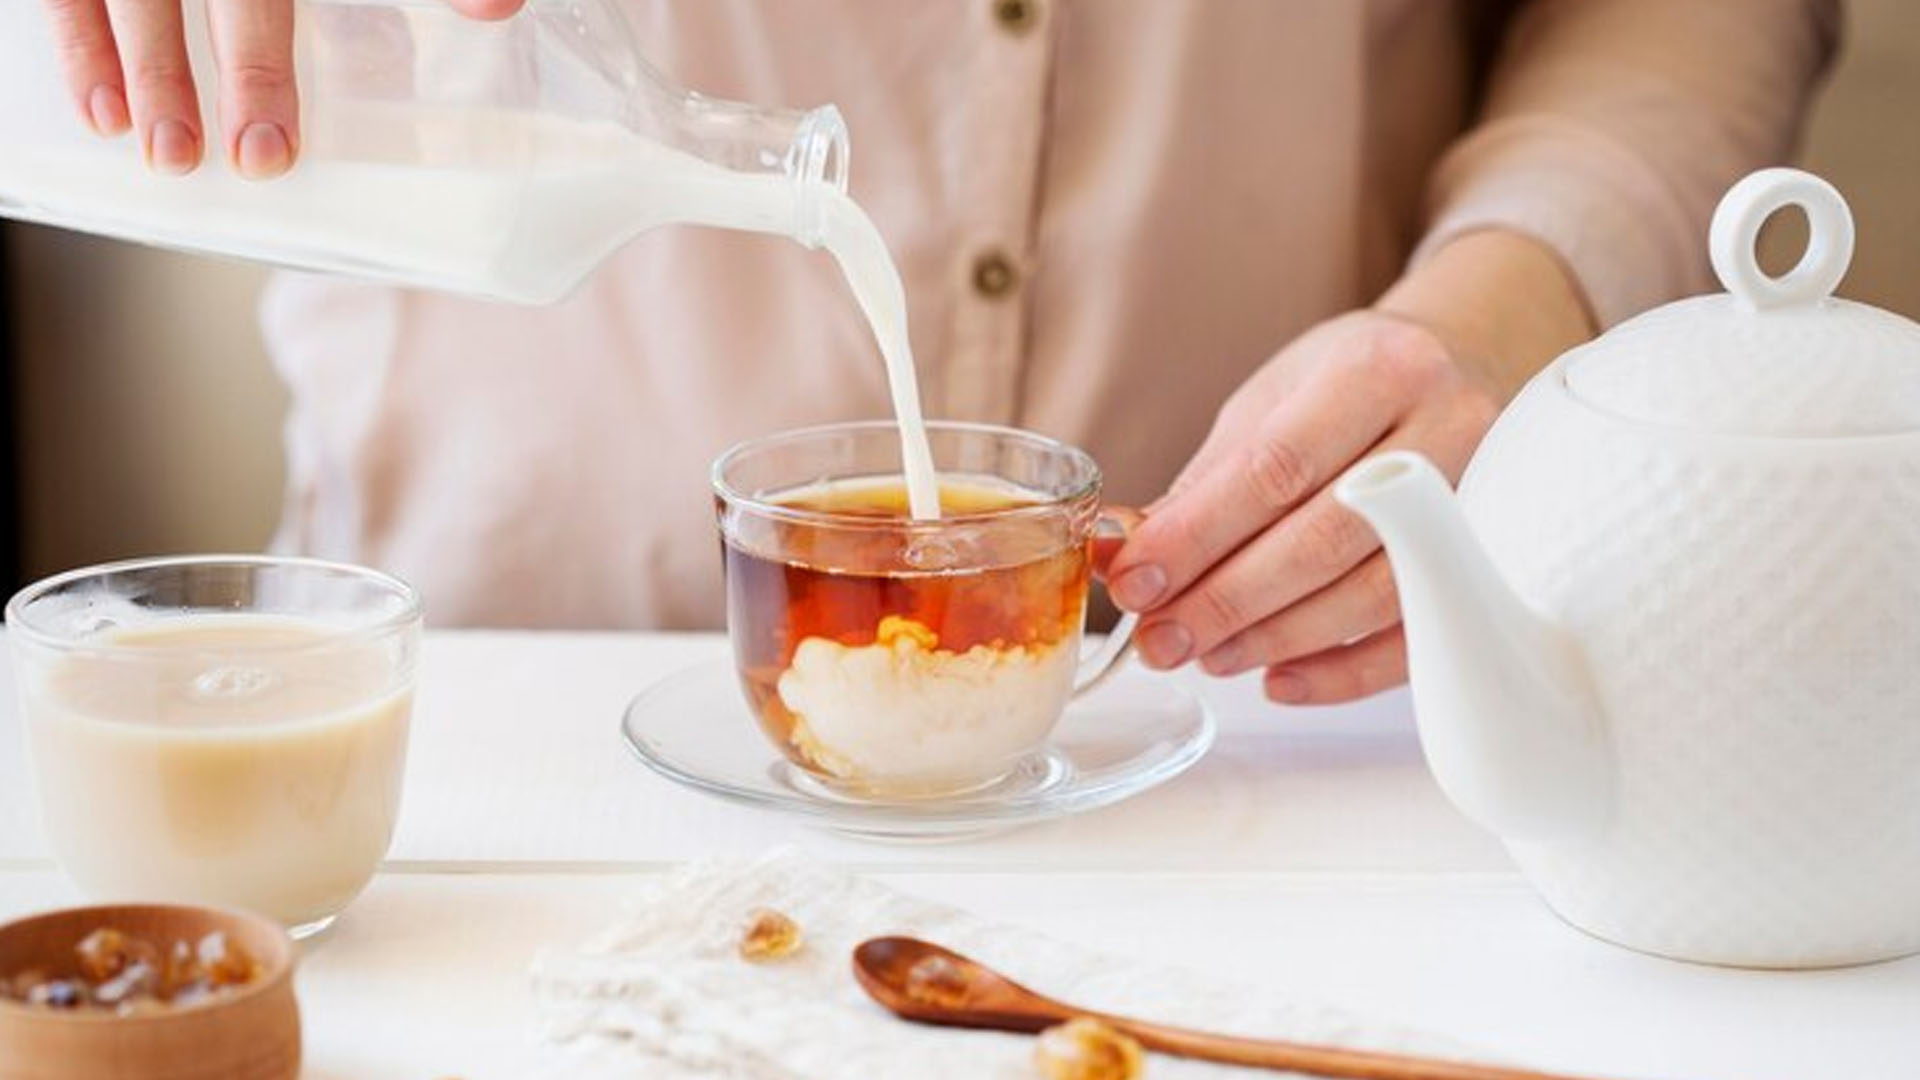 Does adding Milk to Tea reduce its Health Benefits?